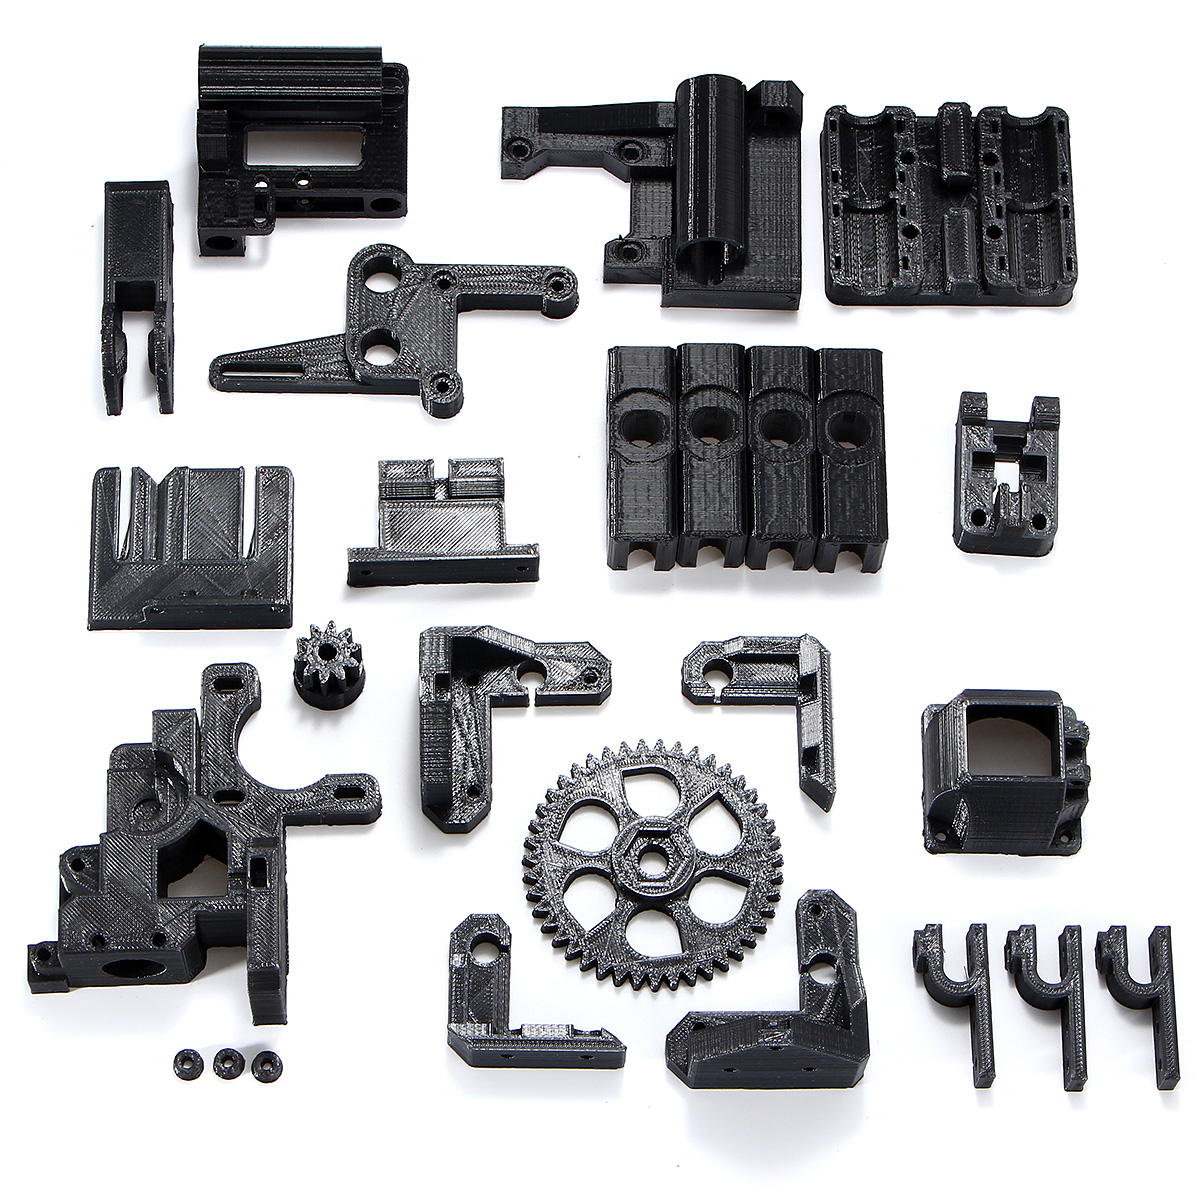 Black-ABS-Filament-Black-3D-Printed-Accessories-Parts-DIY-Kit-For-RepRap-Prusa-i3-3D-Printer-1187085-1